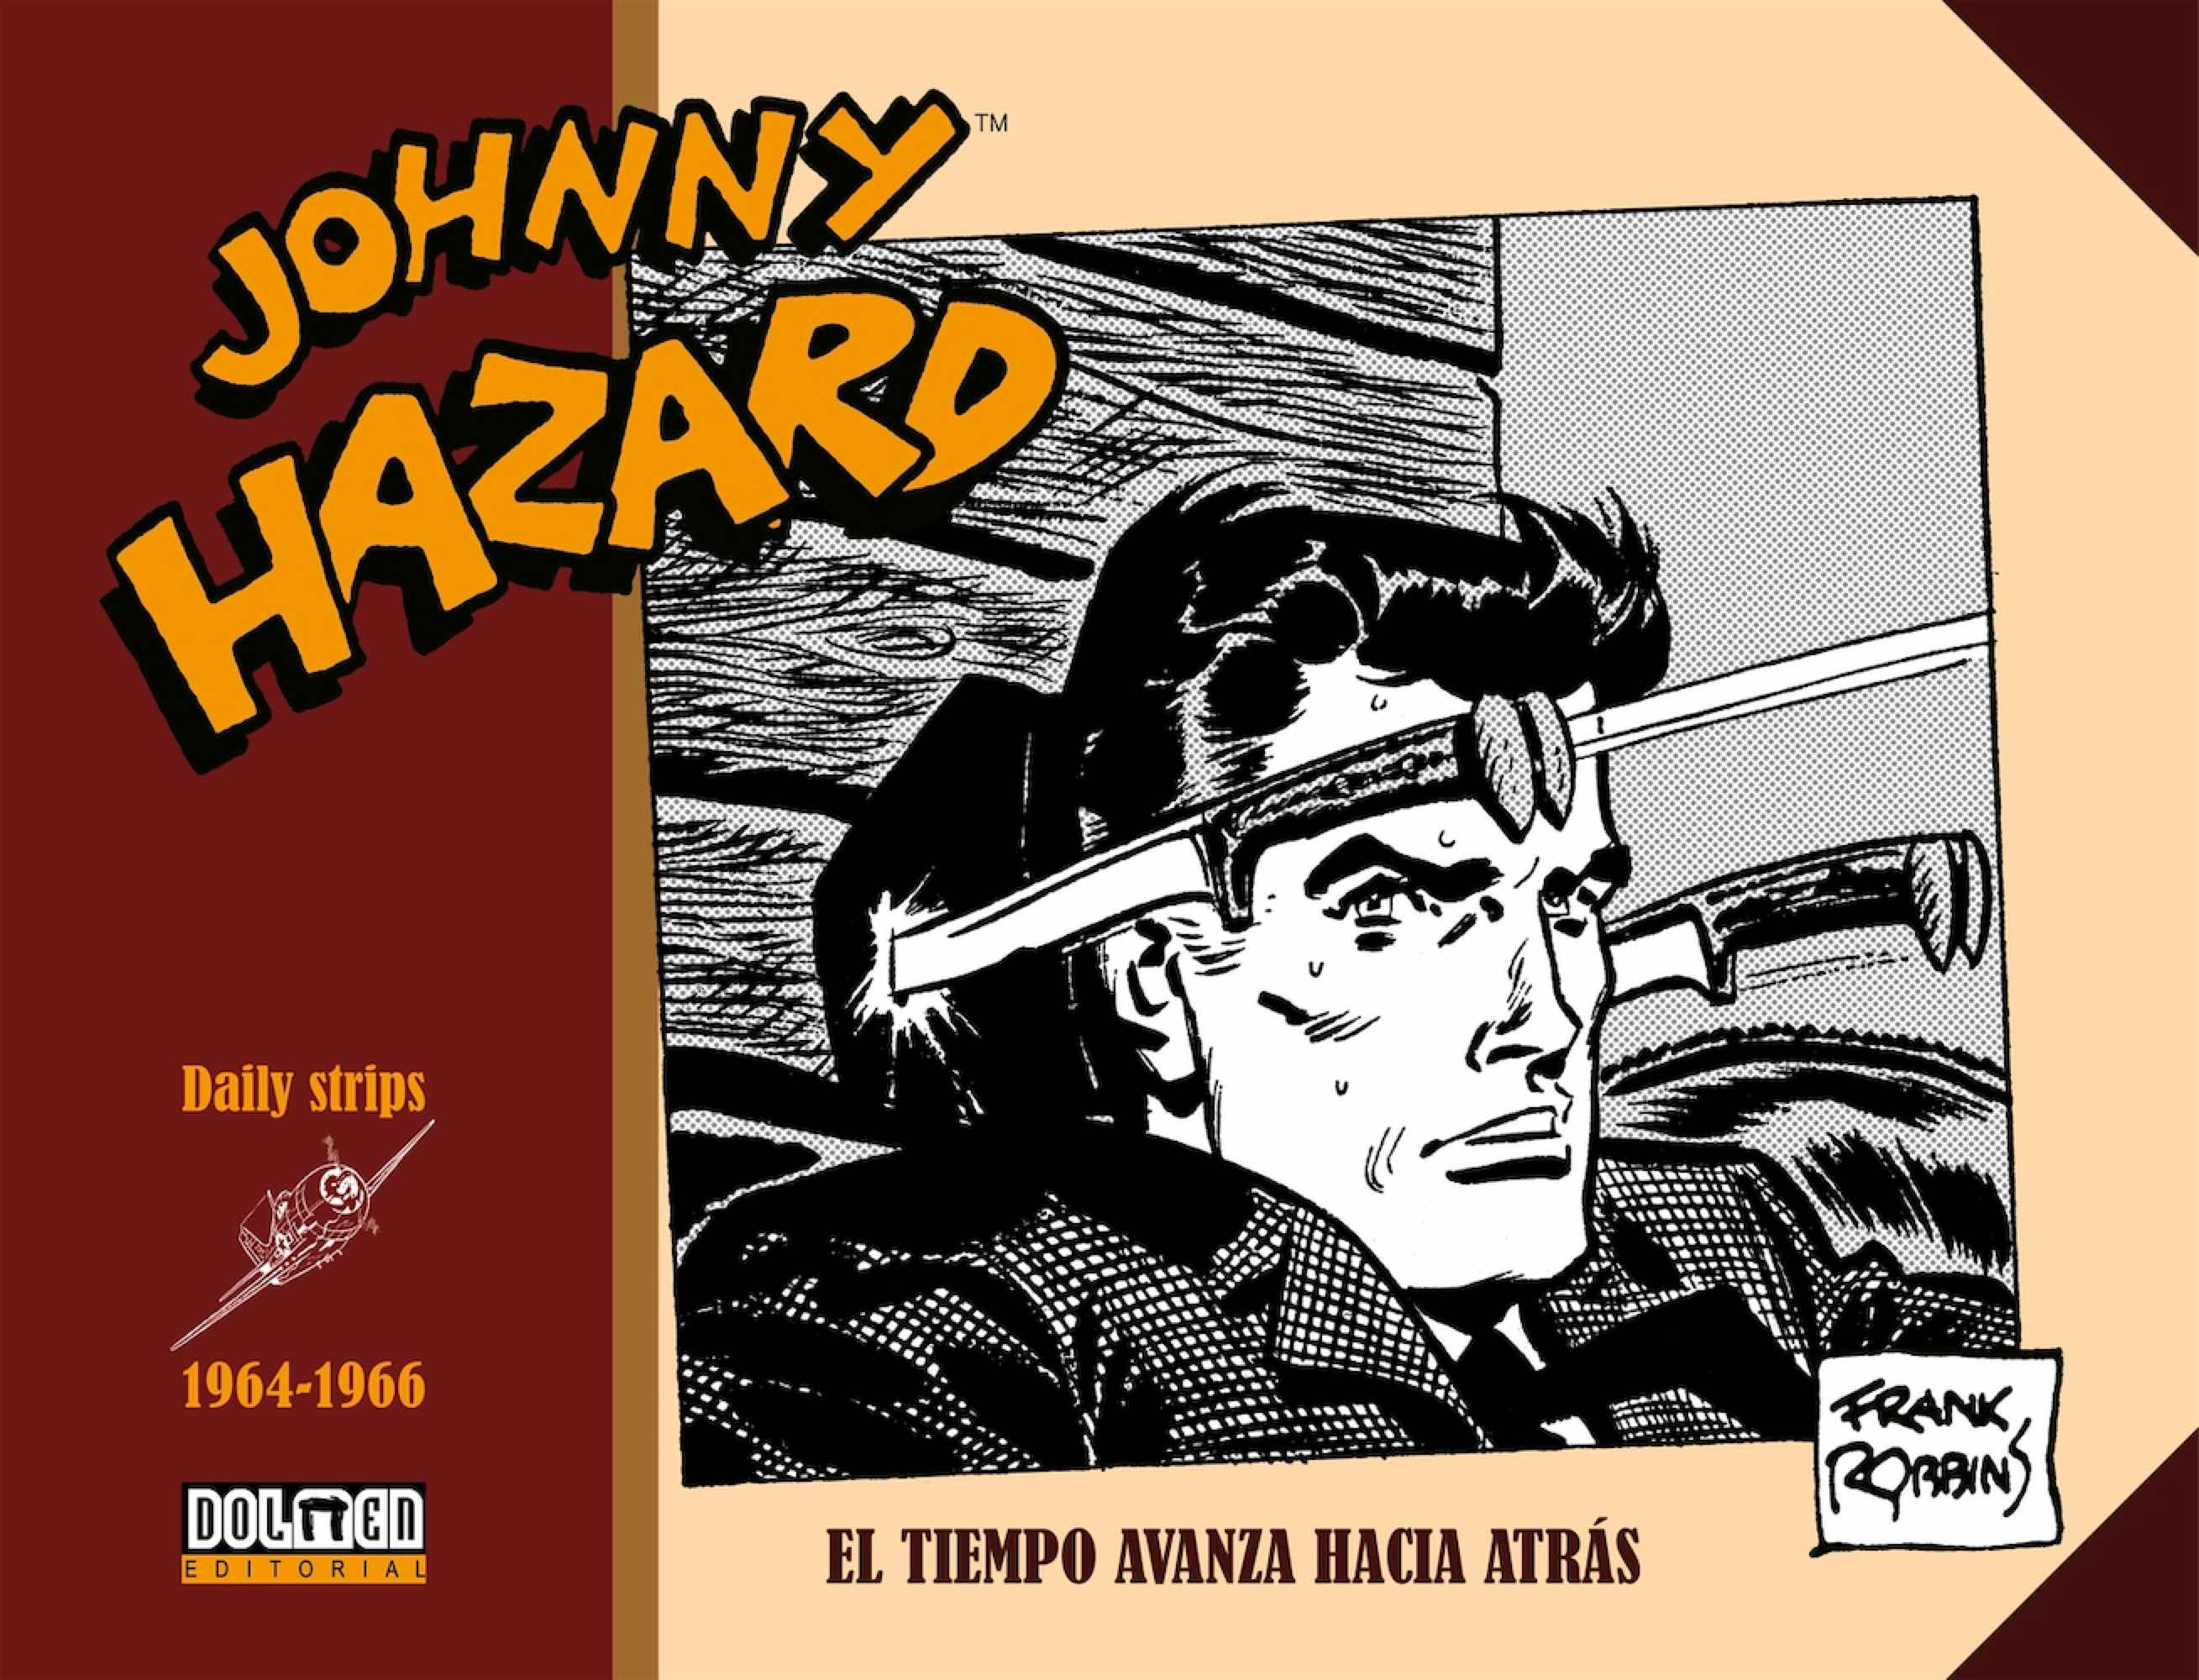 JOHNNY HAZARD 1964-1966